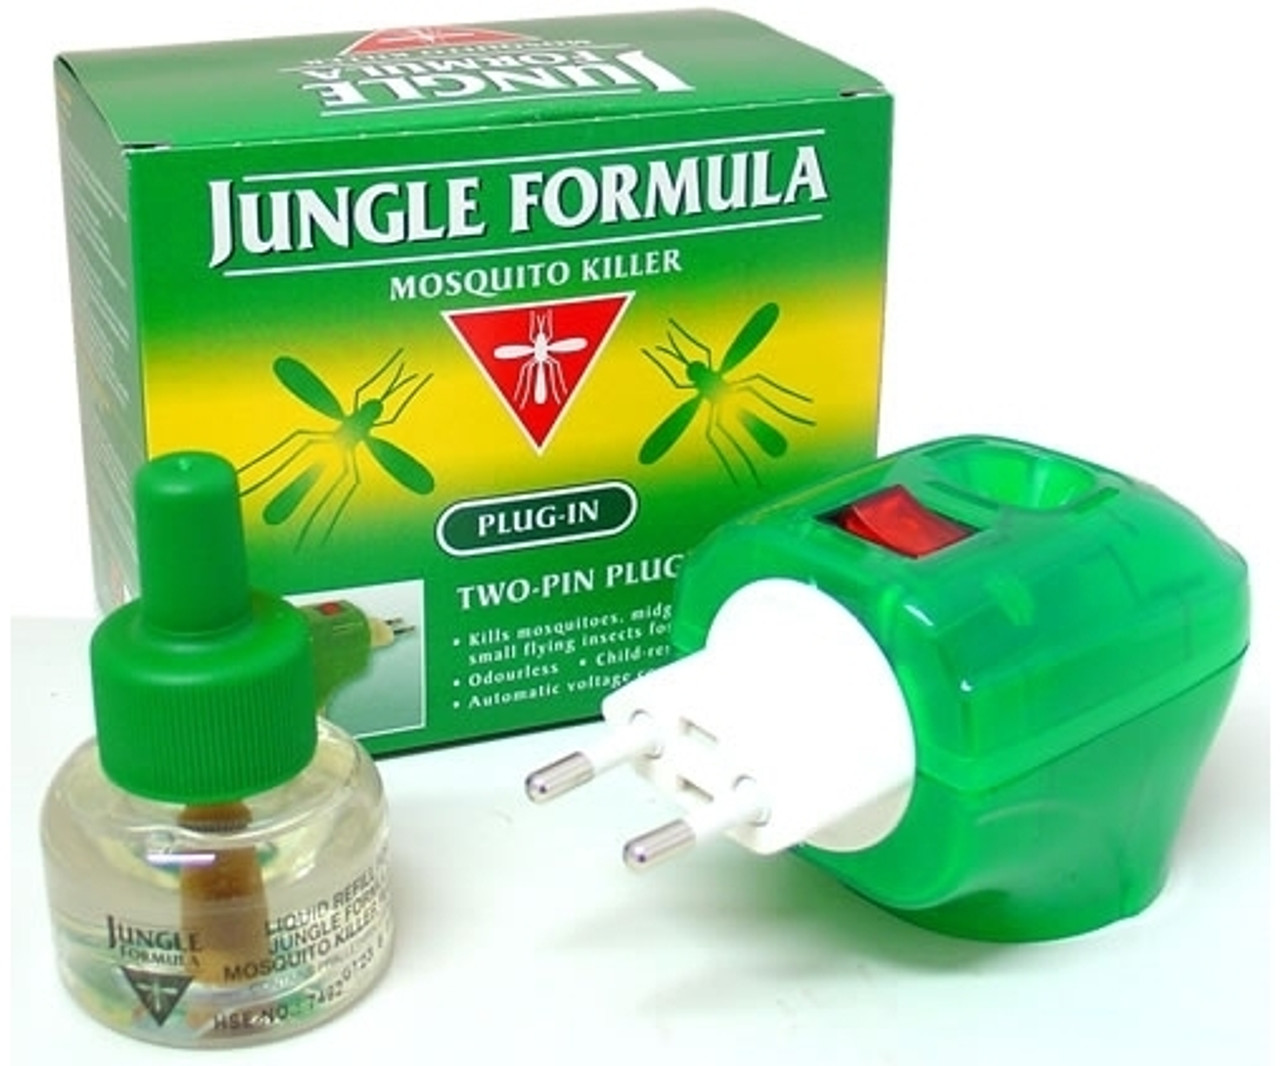 Jungle Formula Plug In - Selles Medical